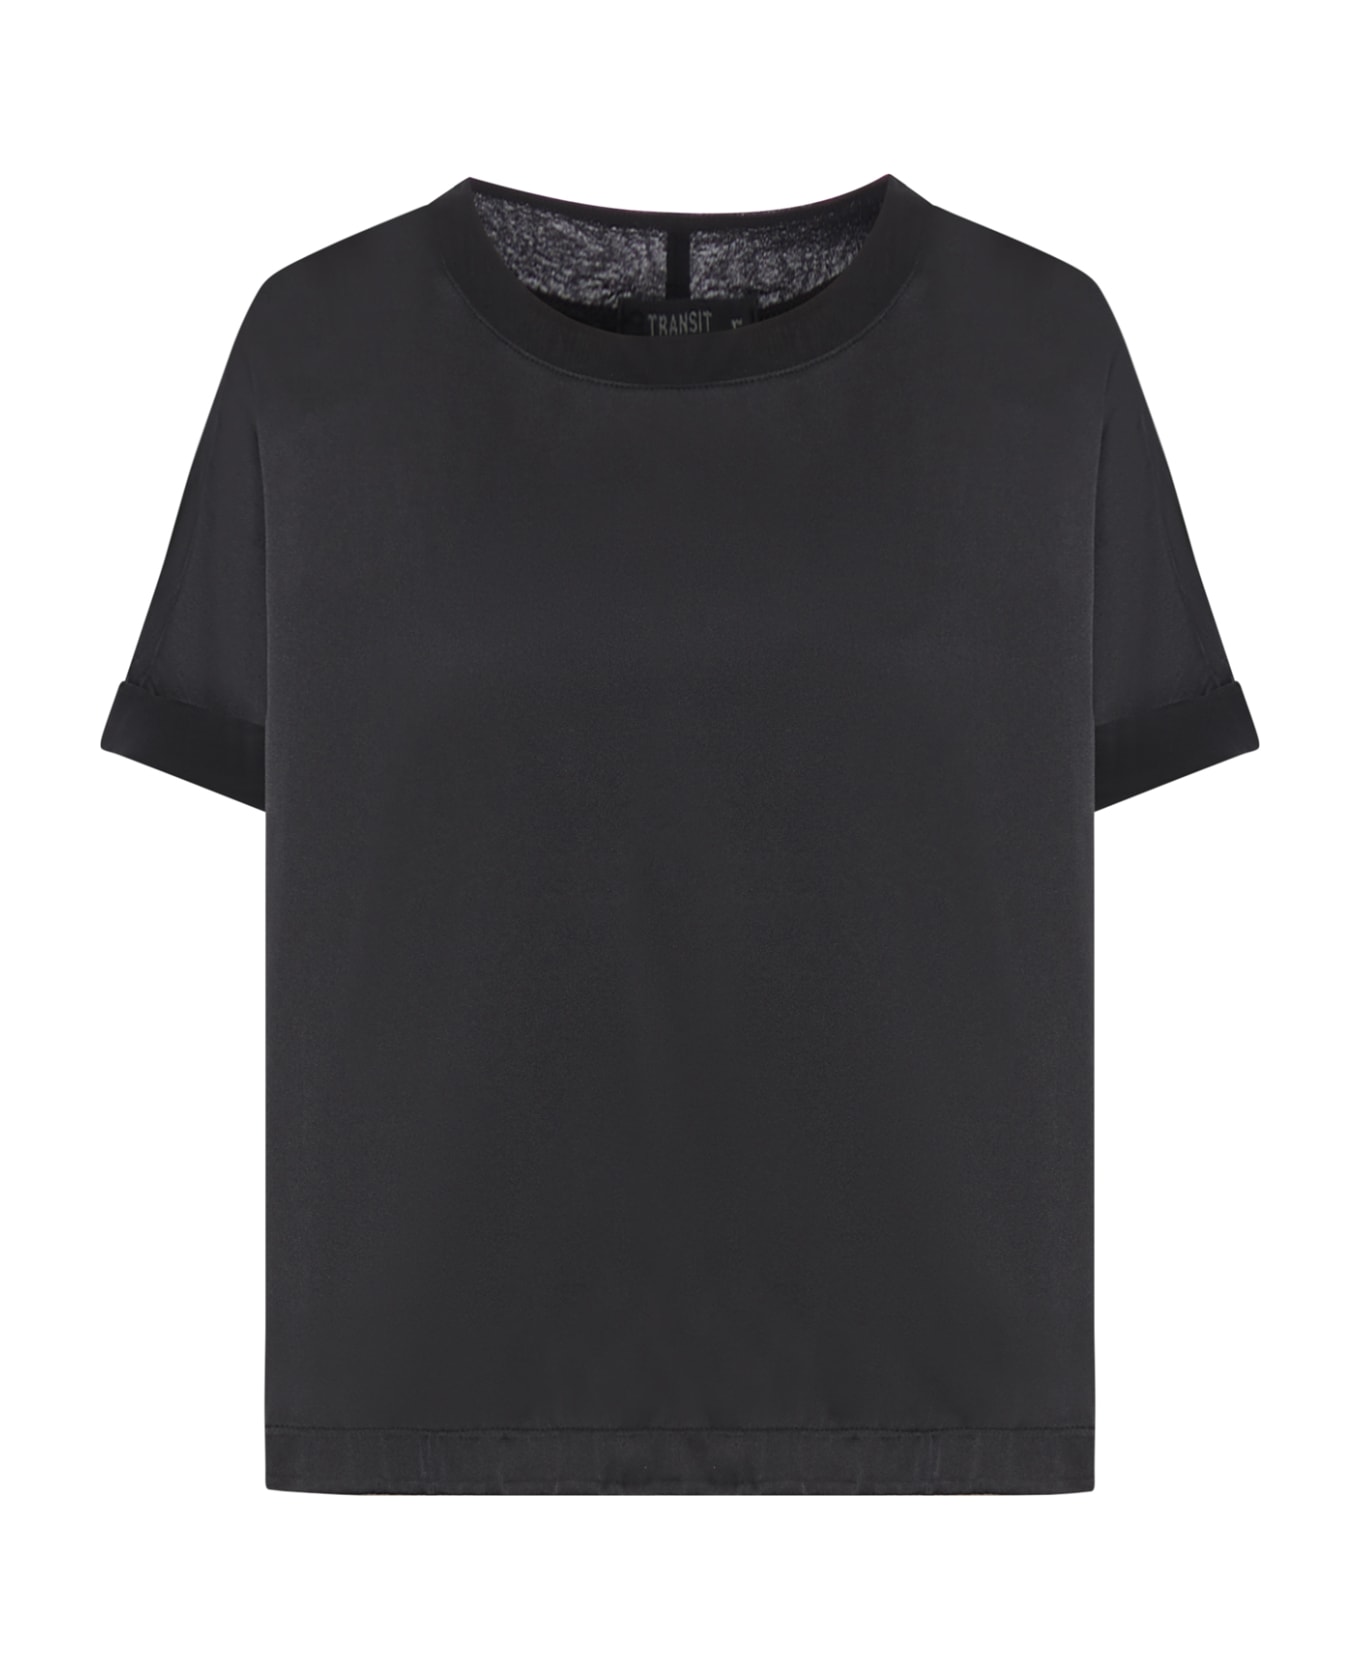 Transit Shirt - Black Tシャツ